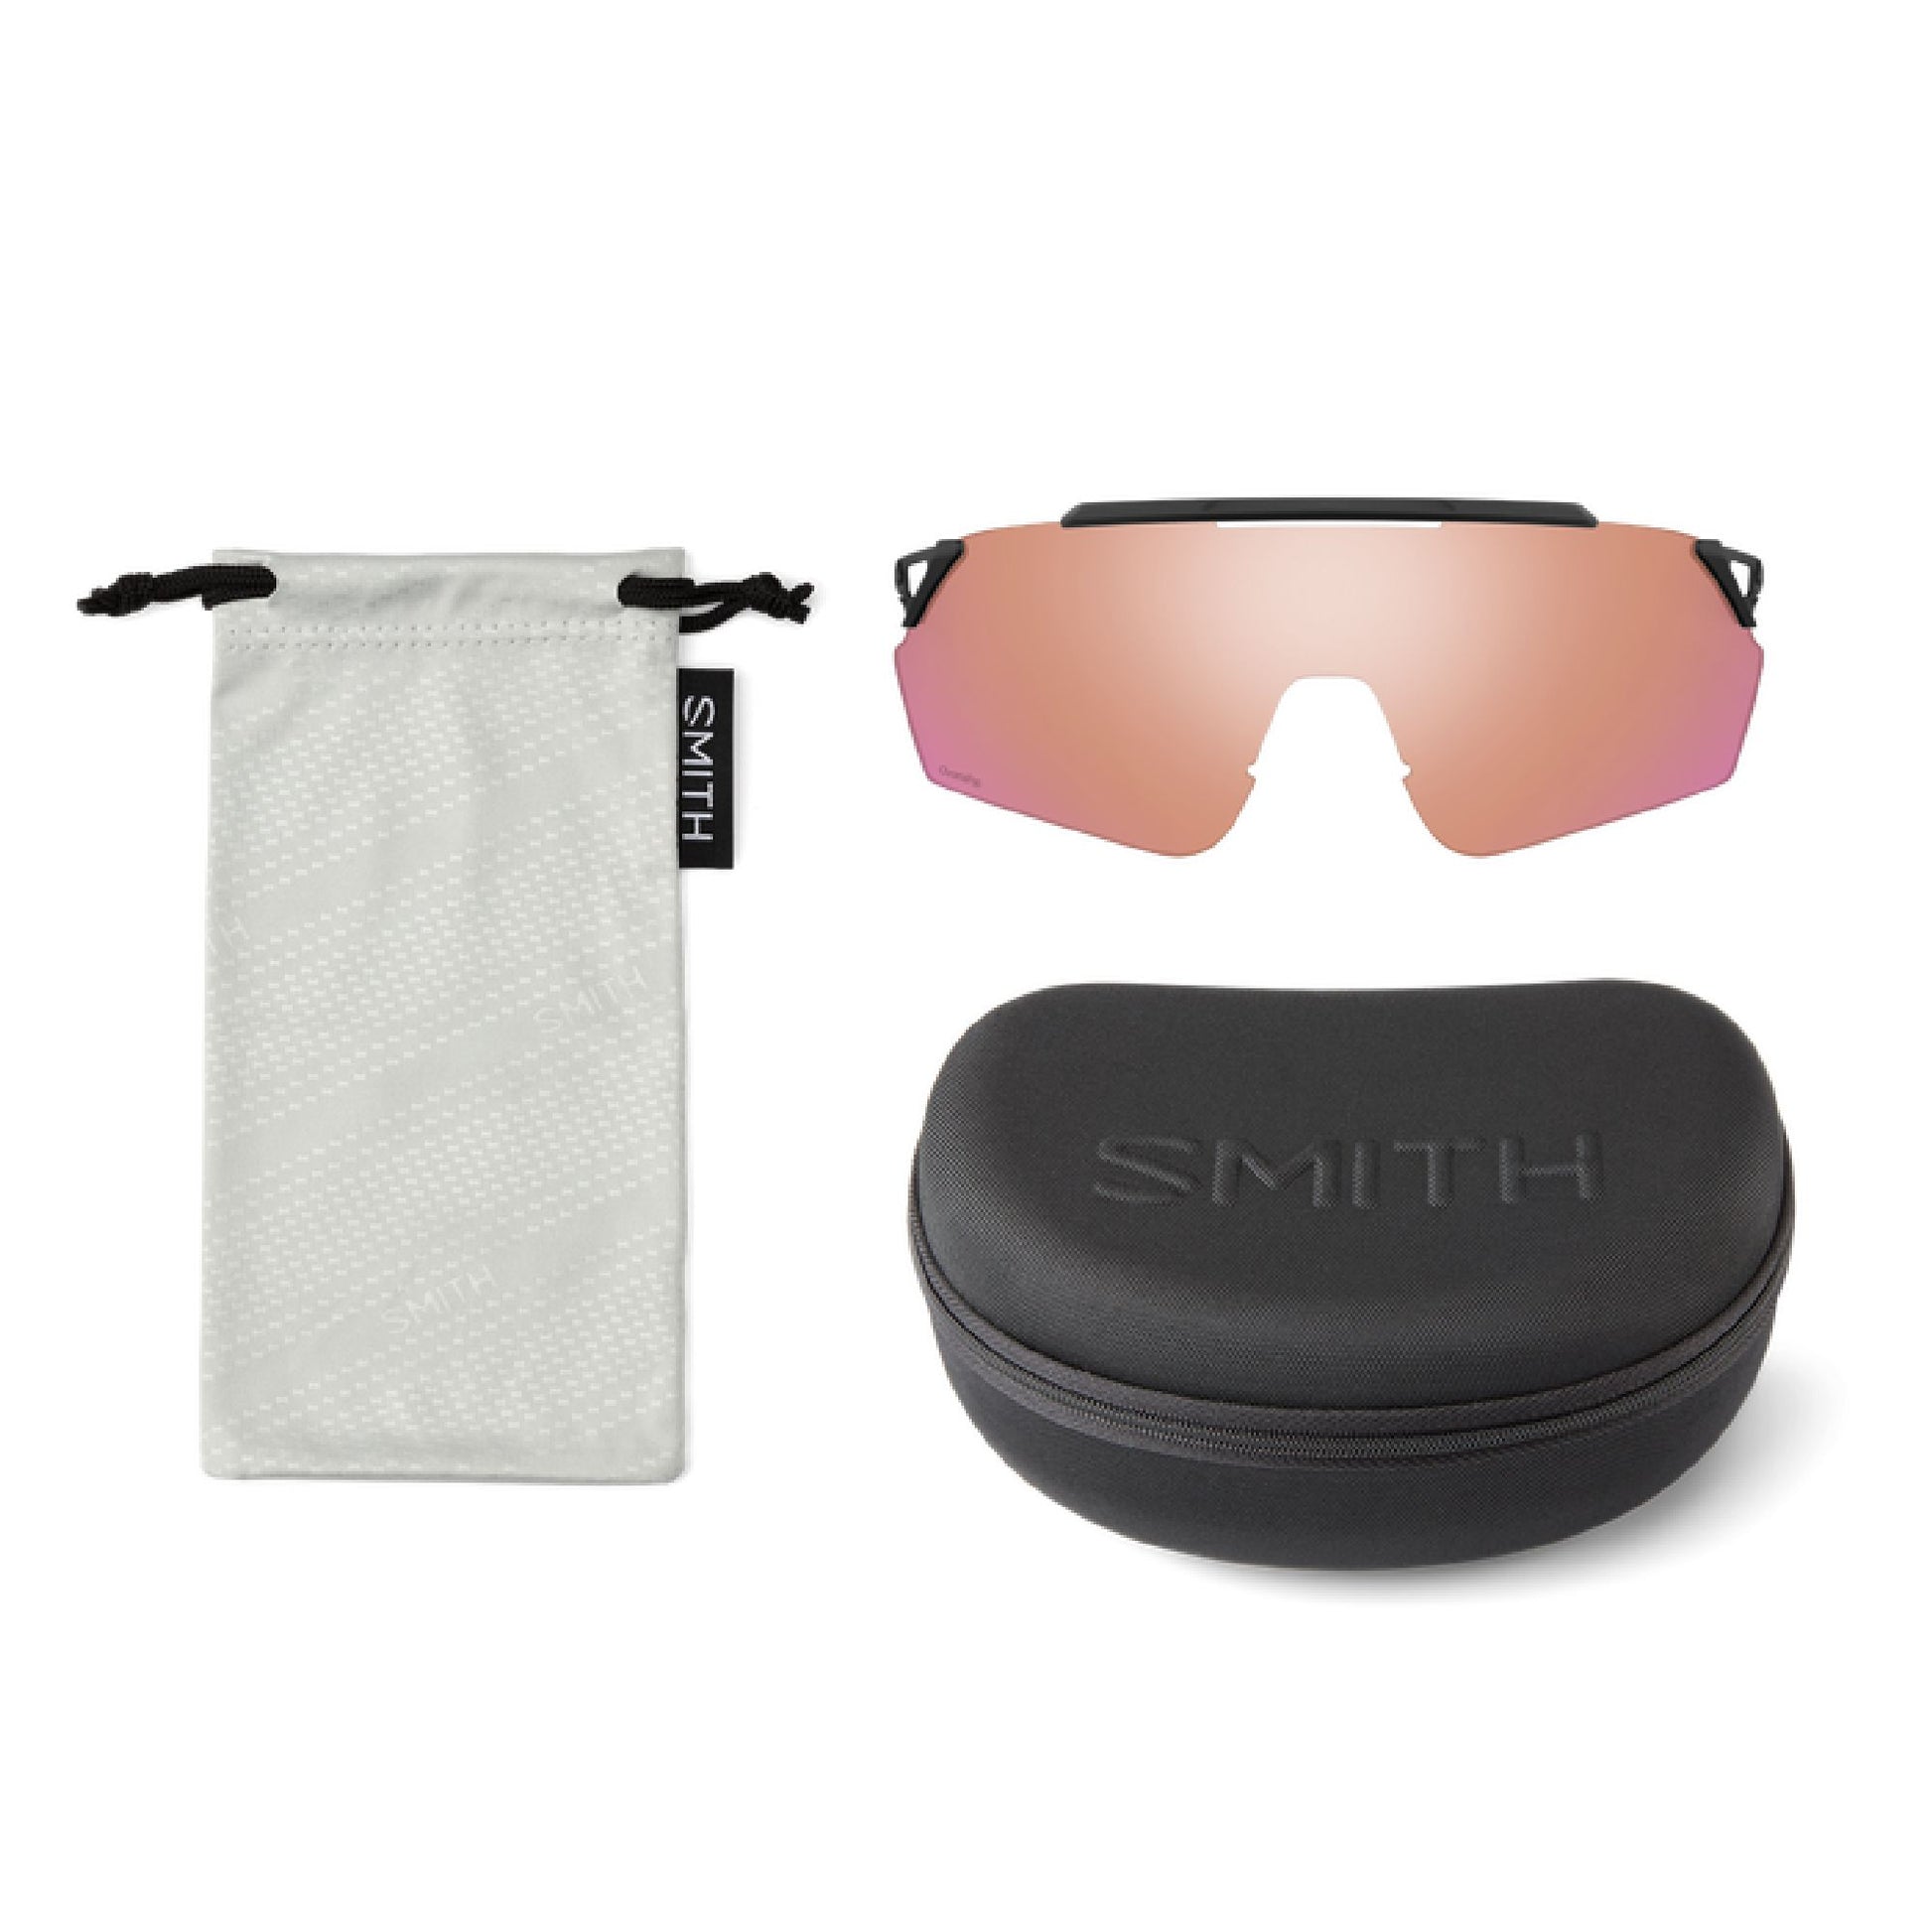 Smith Ruckus Sunglasses Black / Photochromic Clear To Gray Sunglasses